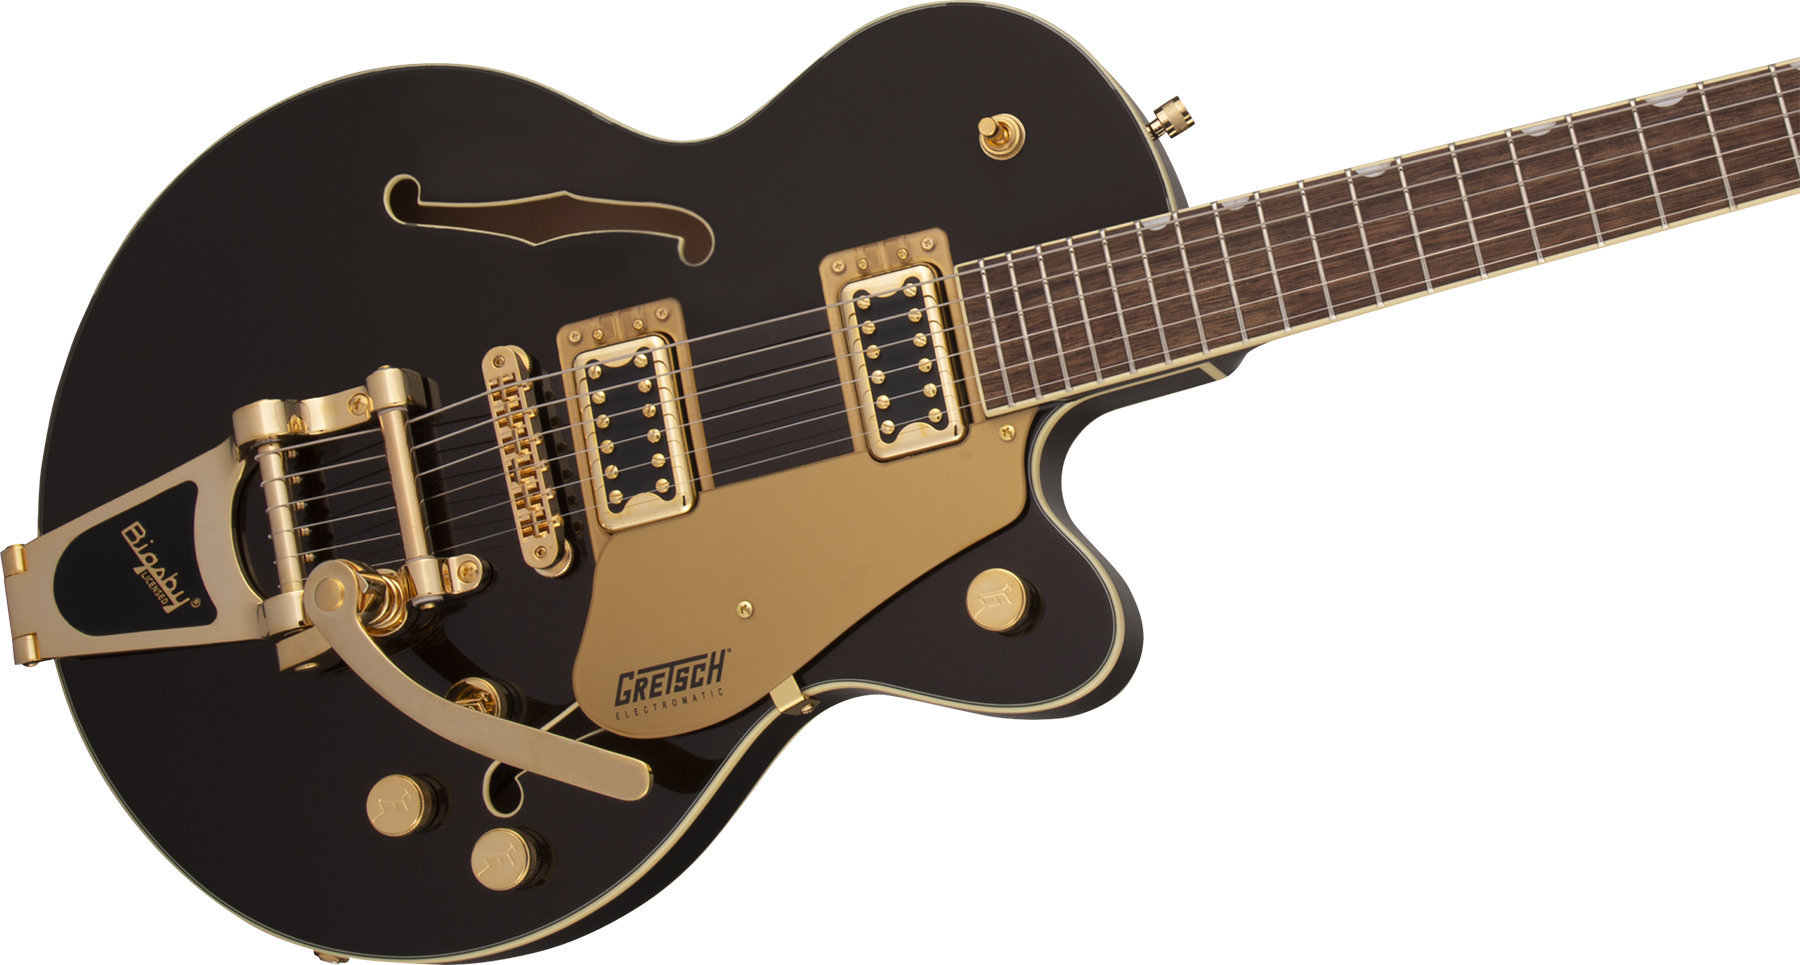 Gretsch G5655tg Electromatic Center Block Jr. Bigsby 2h Trem Lau - Black Gold - Semi hollow elektriche gitaar - Variation 2